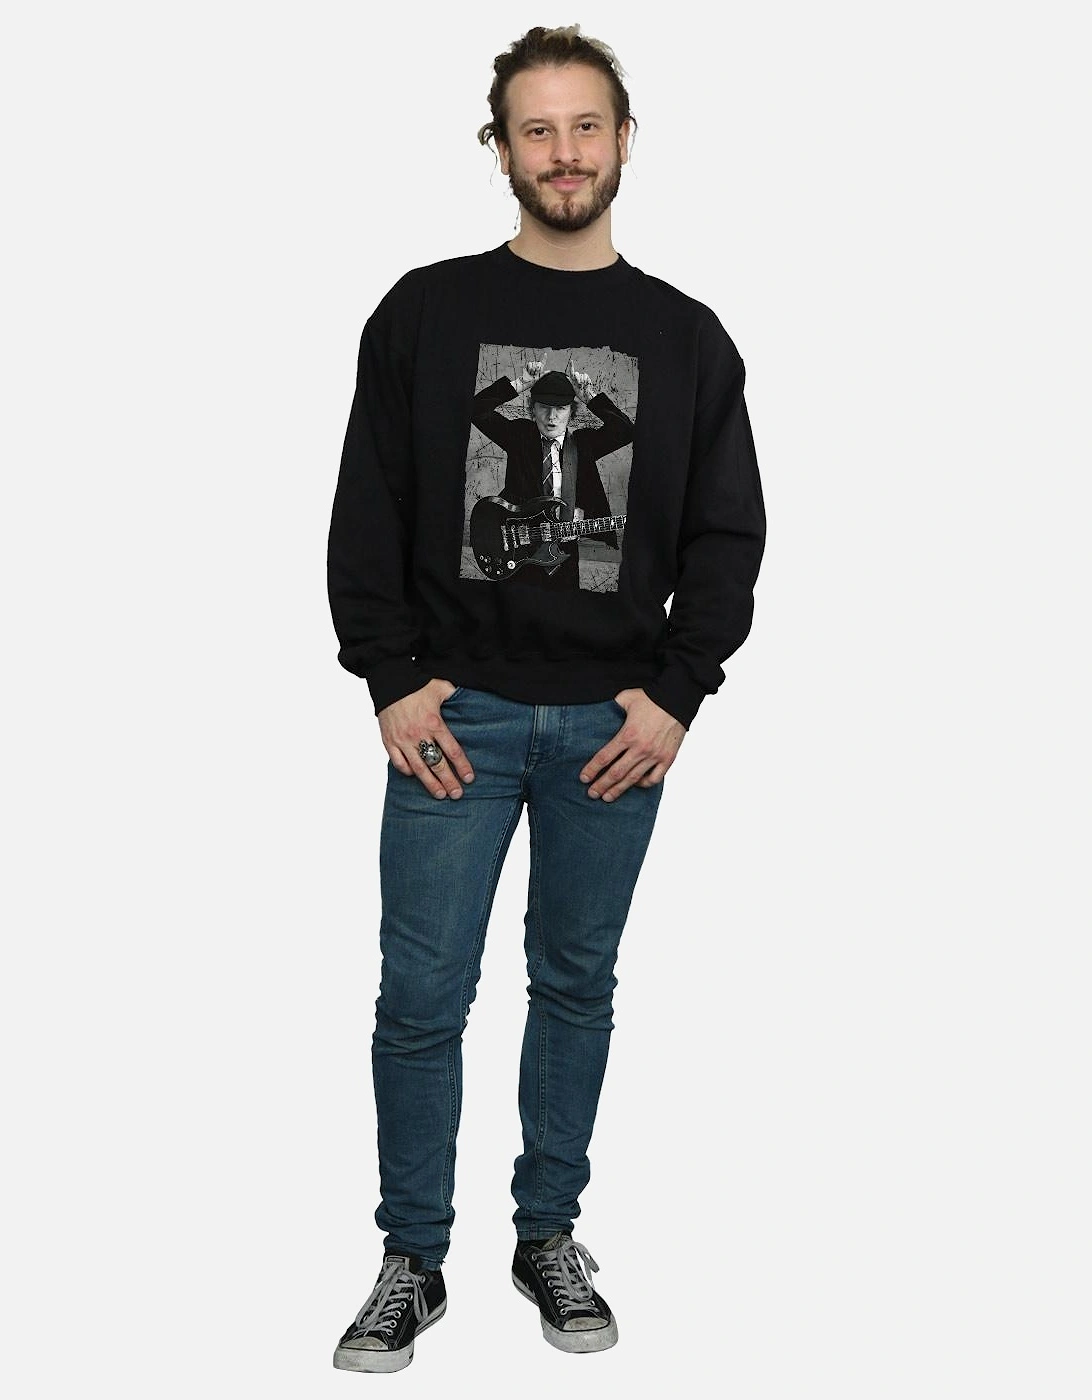 Mens Angus Young Distressed Photo Sweatshirt